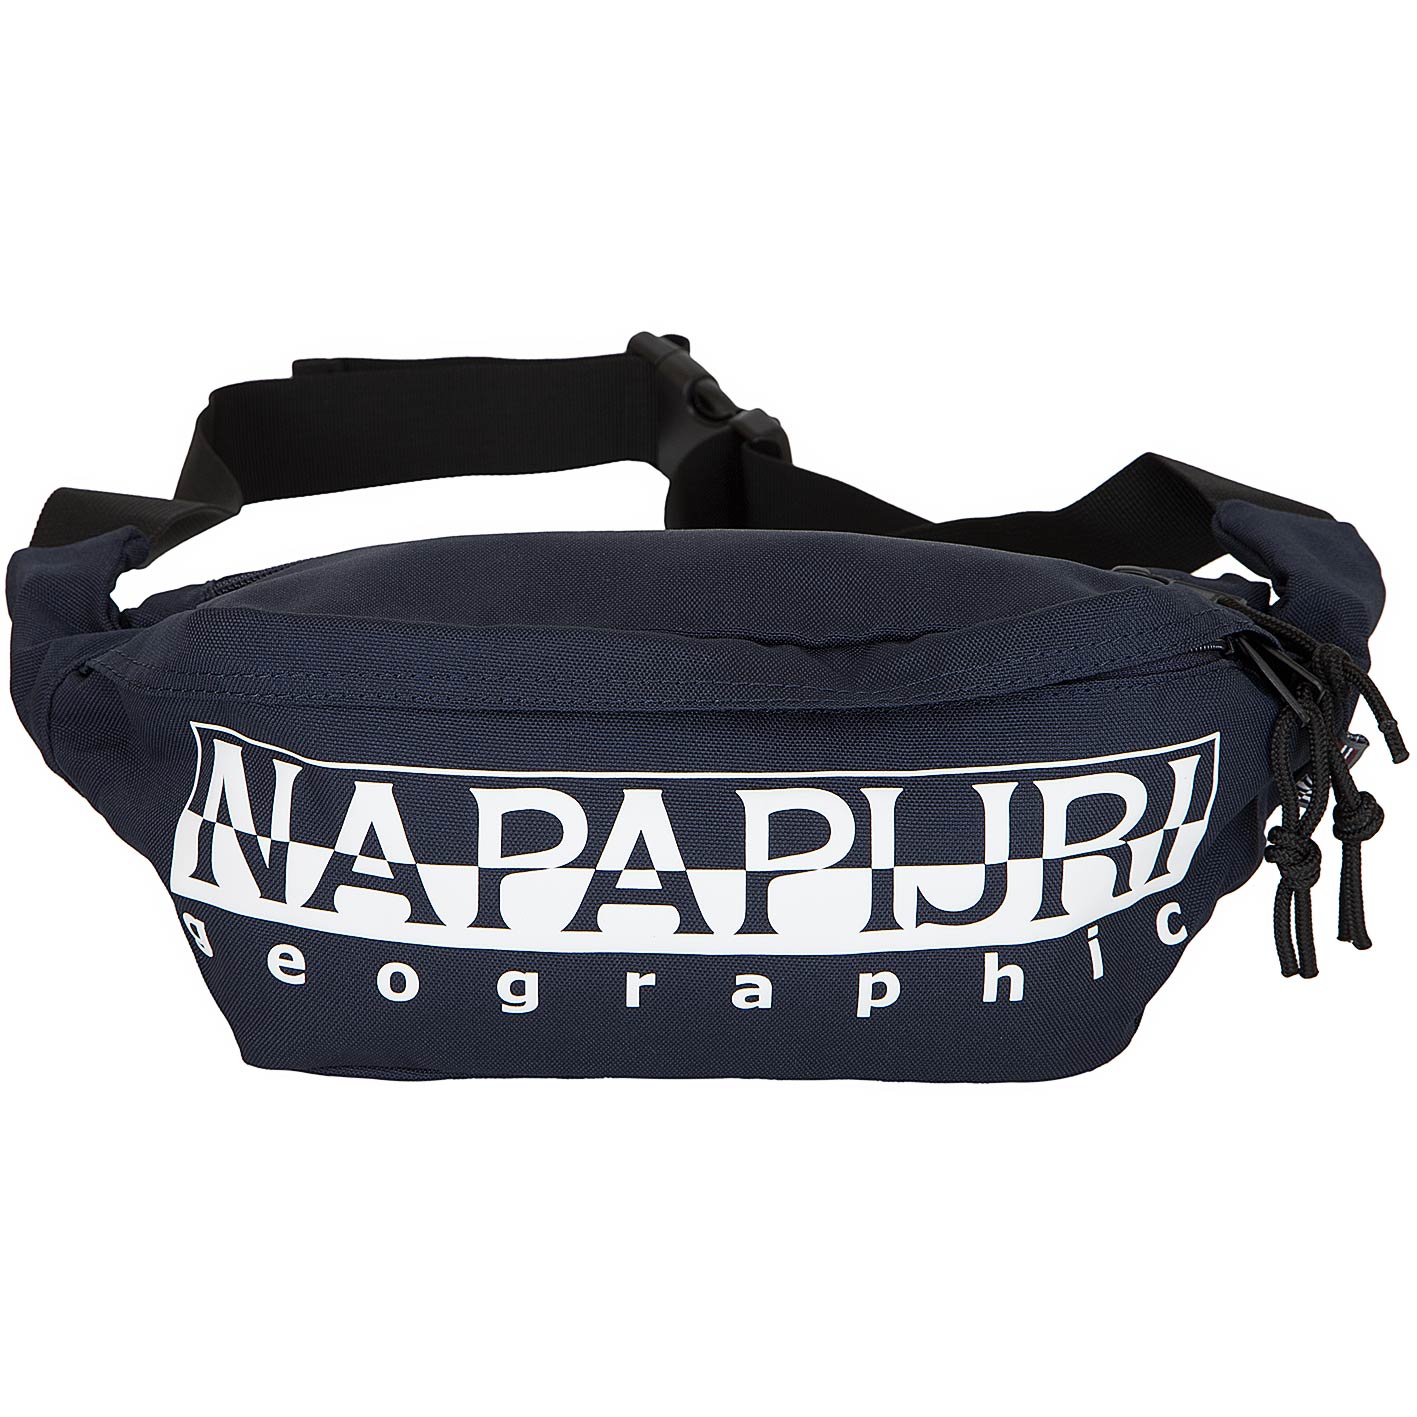 ☆ Napapijri Gürteltasche Happy Bum Bag 1 marineblau - hier bestellen!